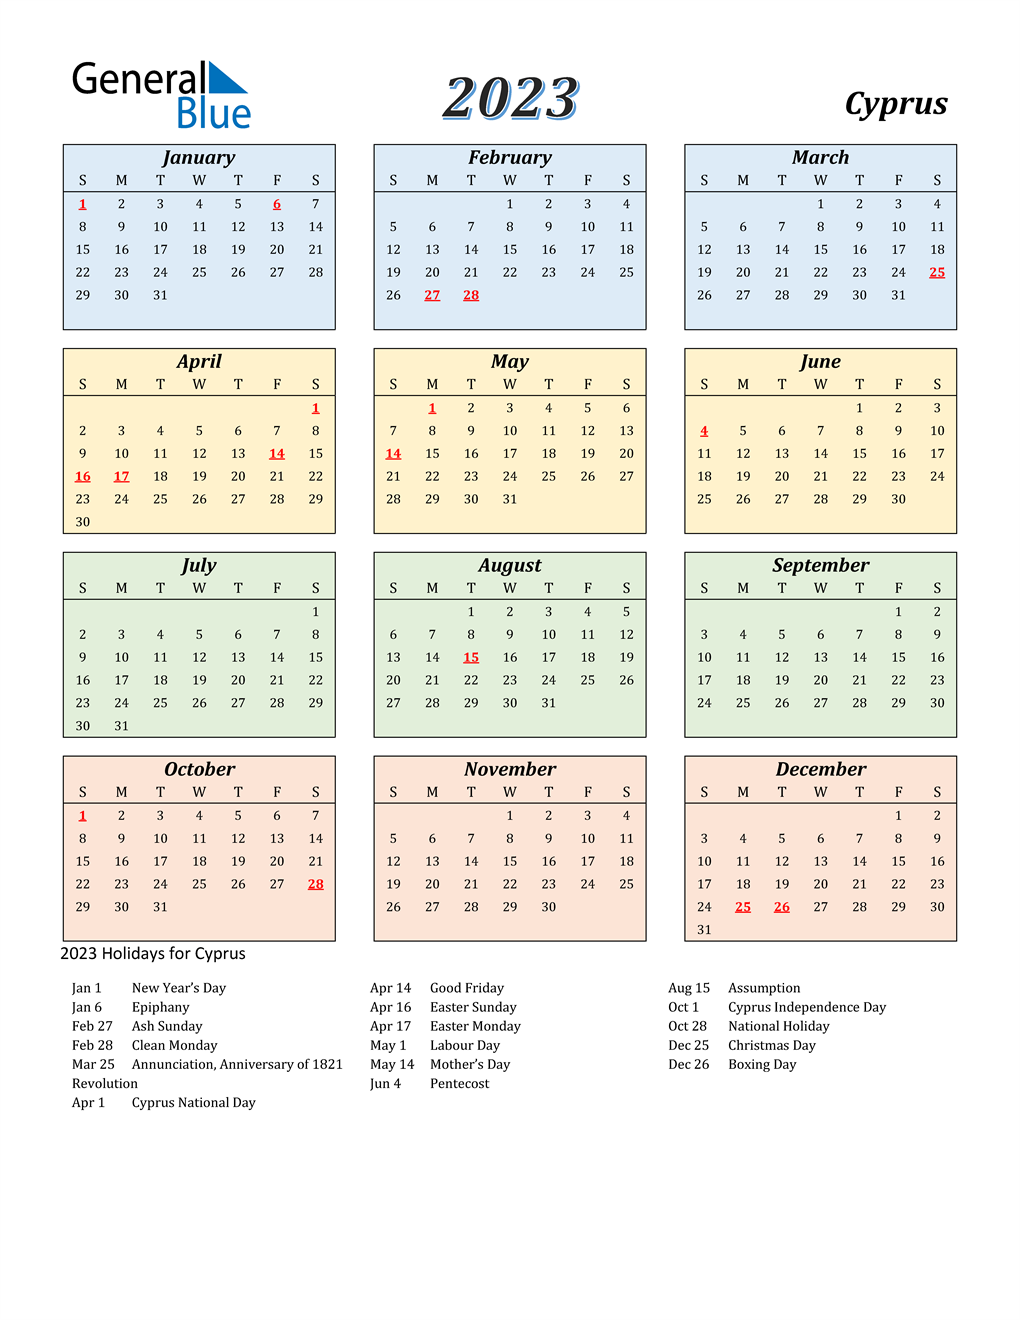 2023 Cyprus Calendar with Holidays